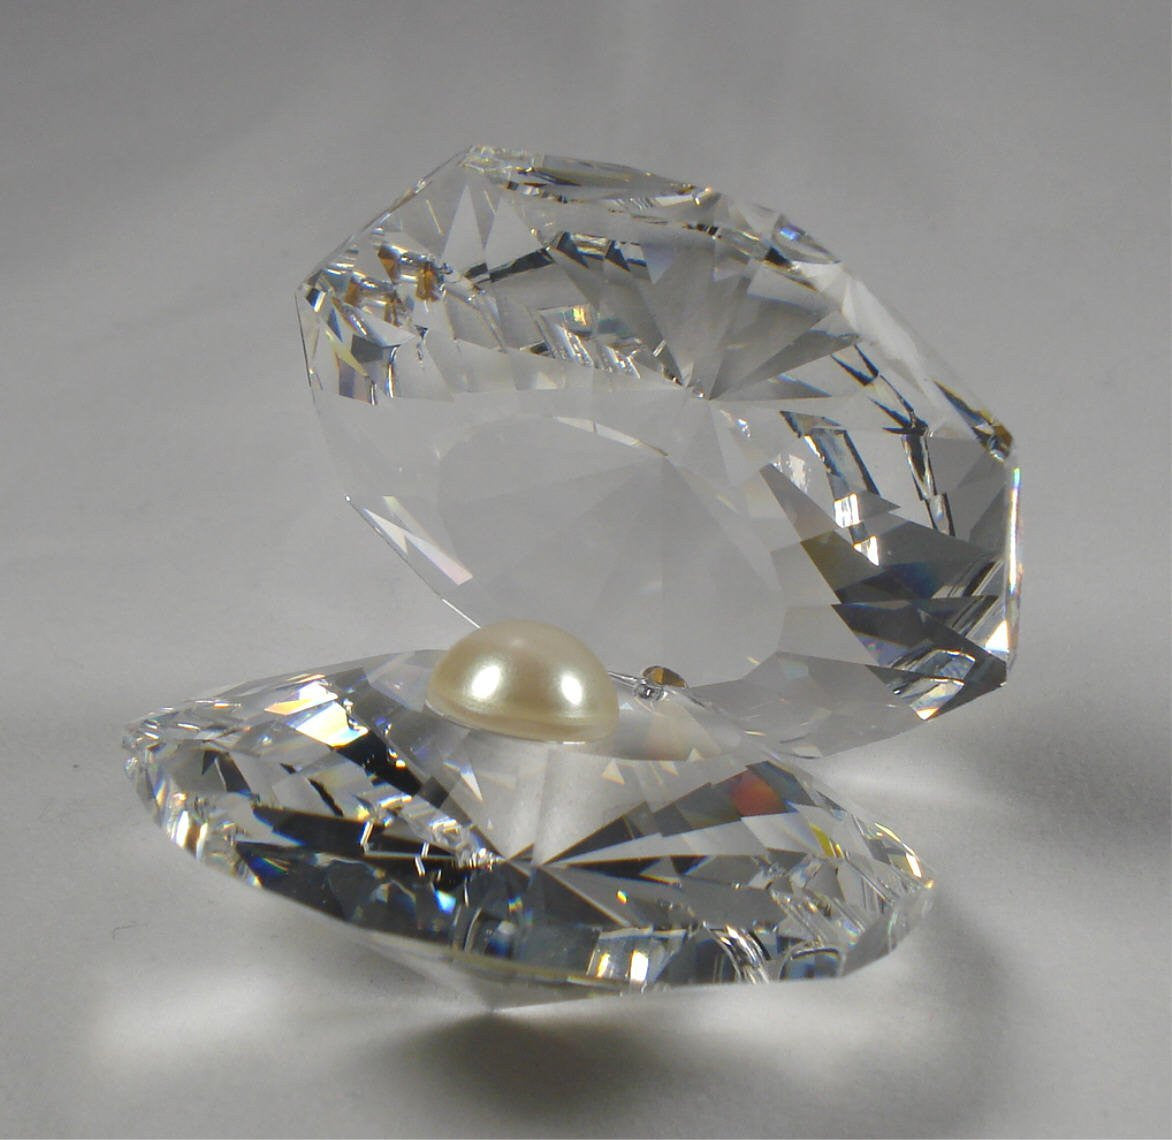 Crystal Oyster - Oyster Figurine Handcrafted By Bjcrystalgifts Using Swarovski Crystal